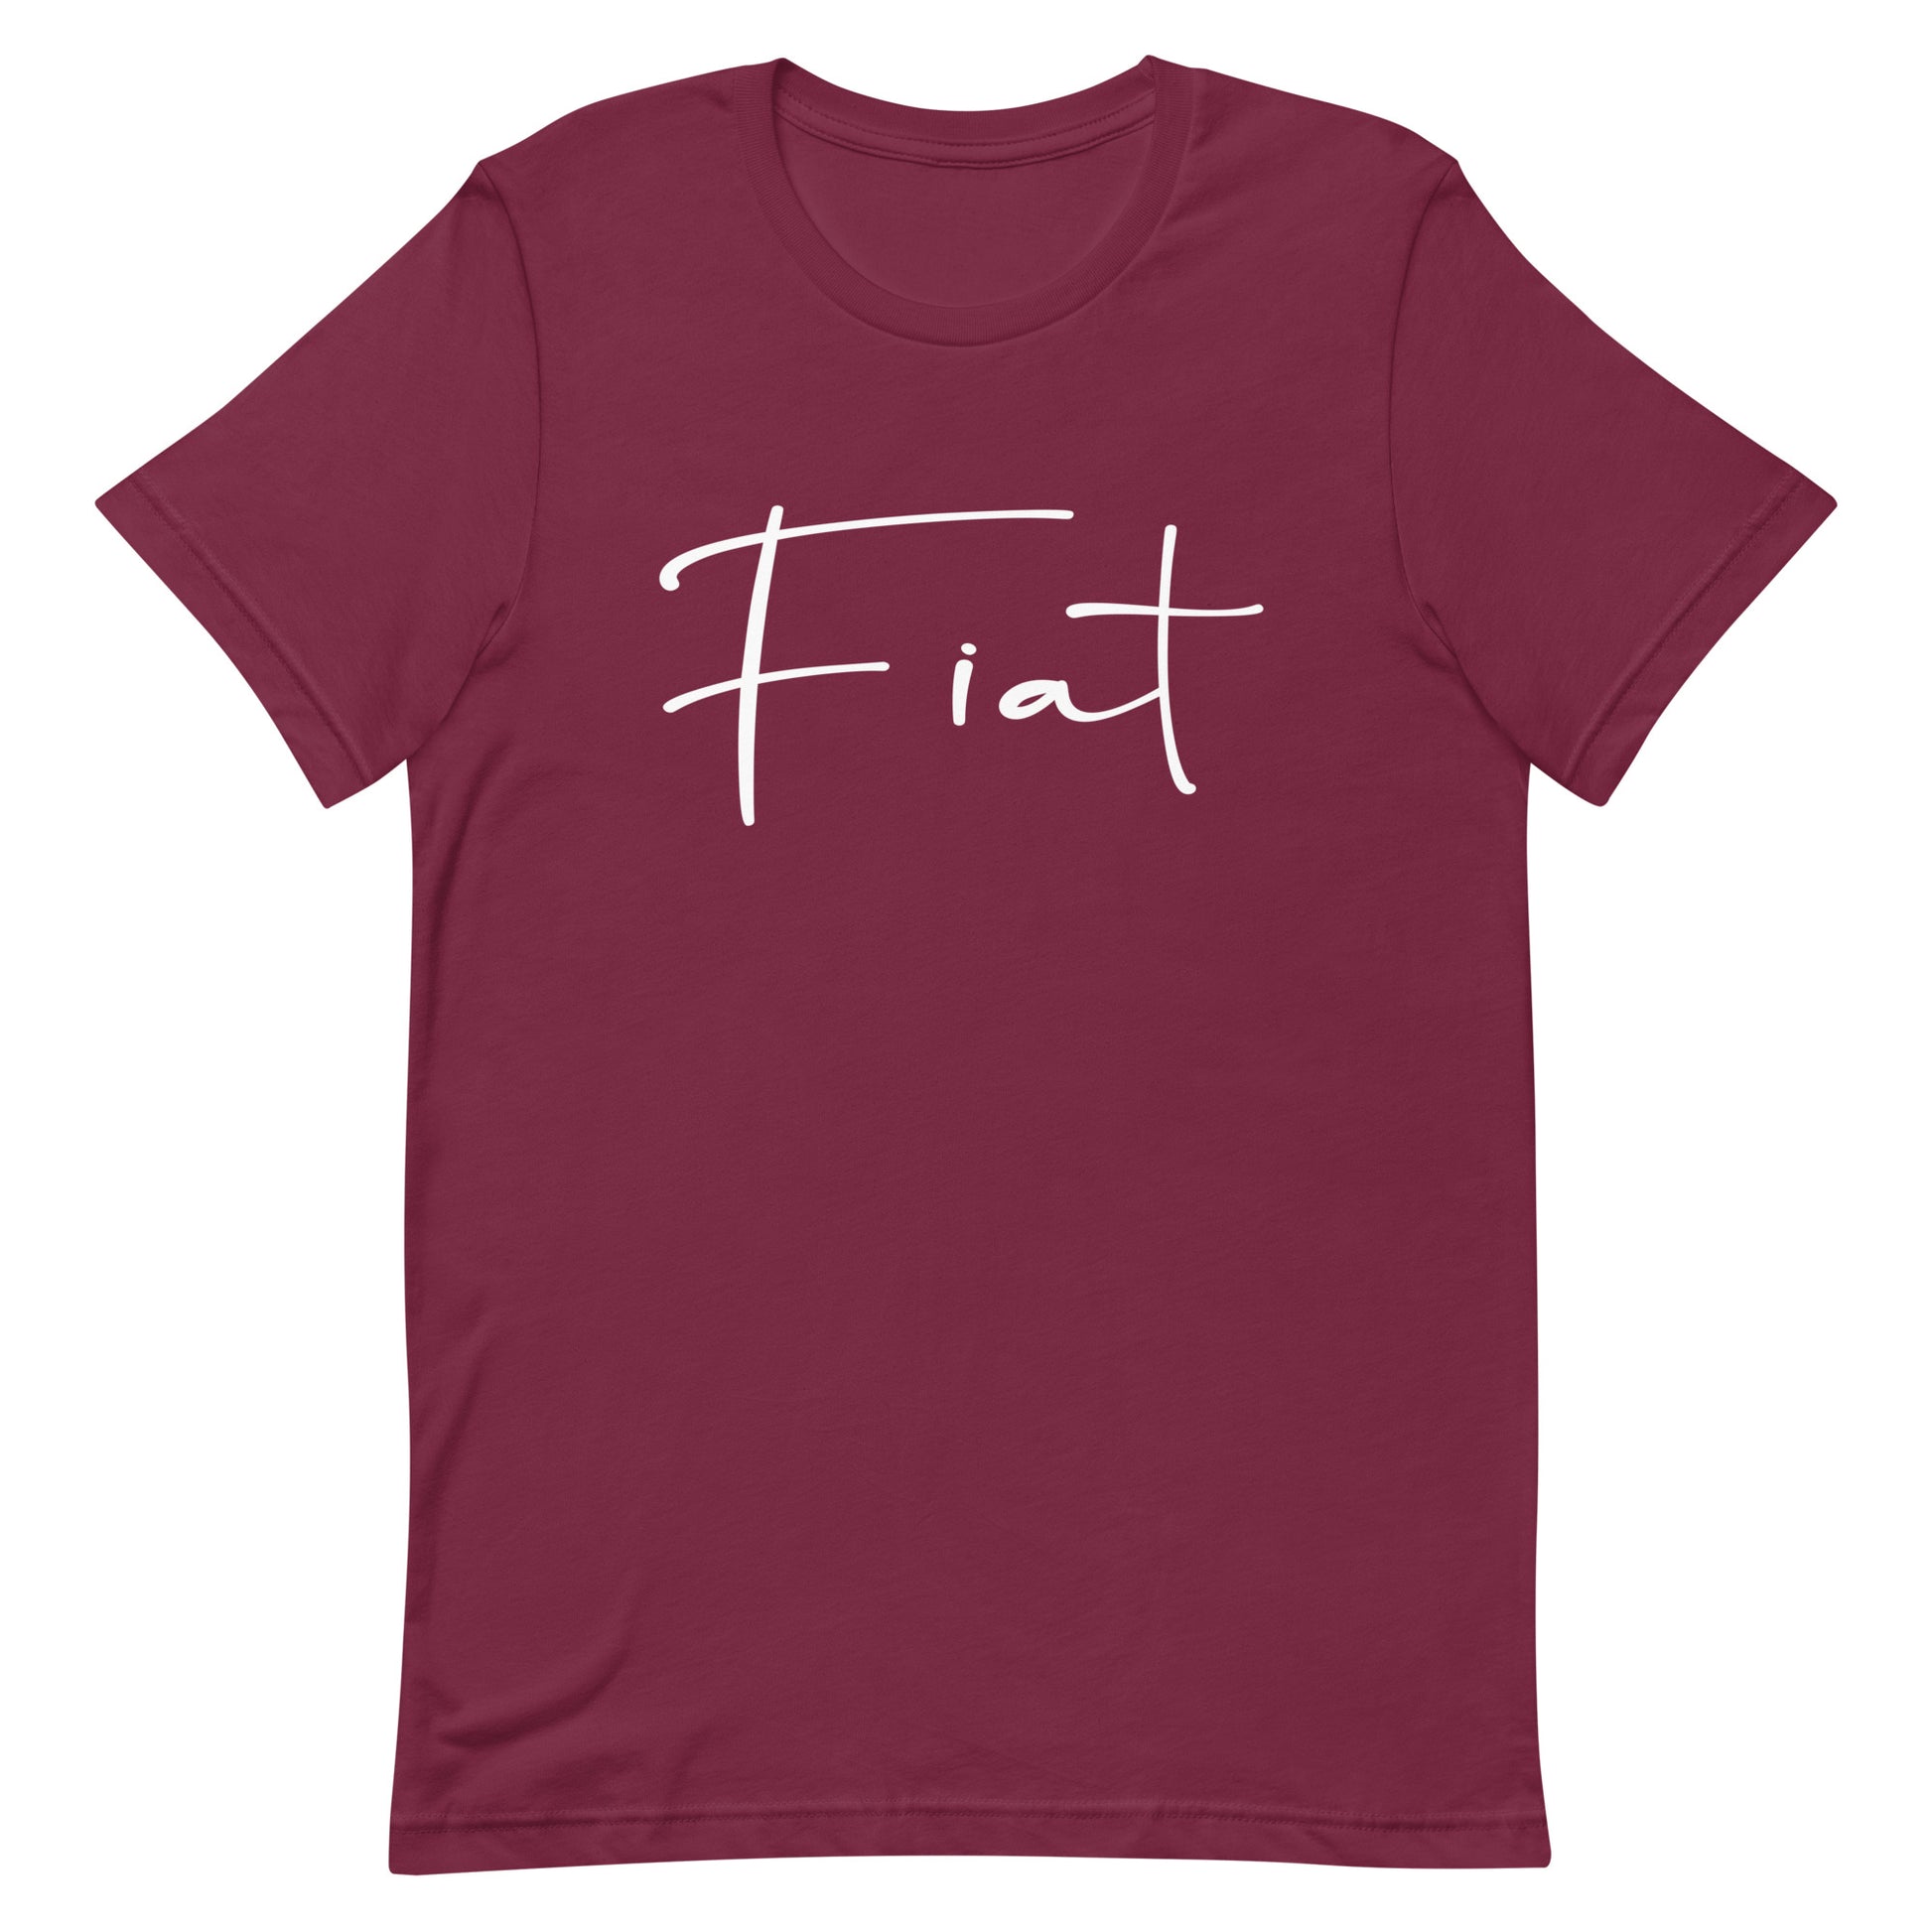 Fiat T-shirt in Maroon